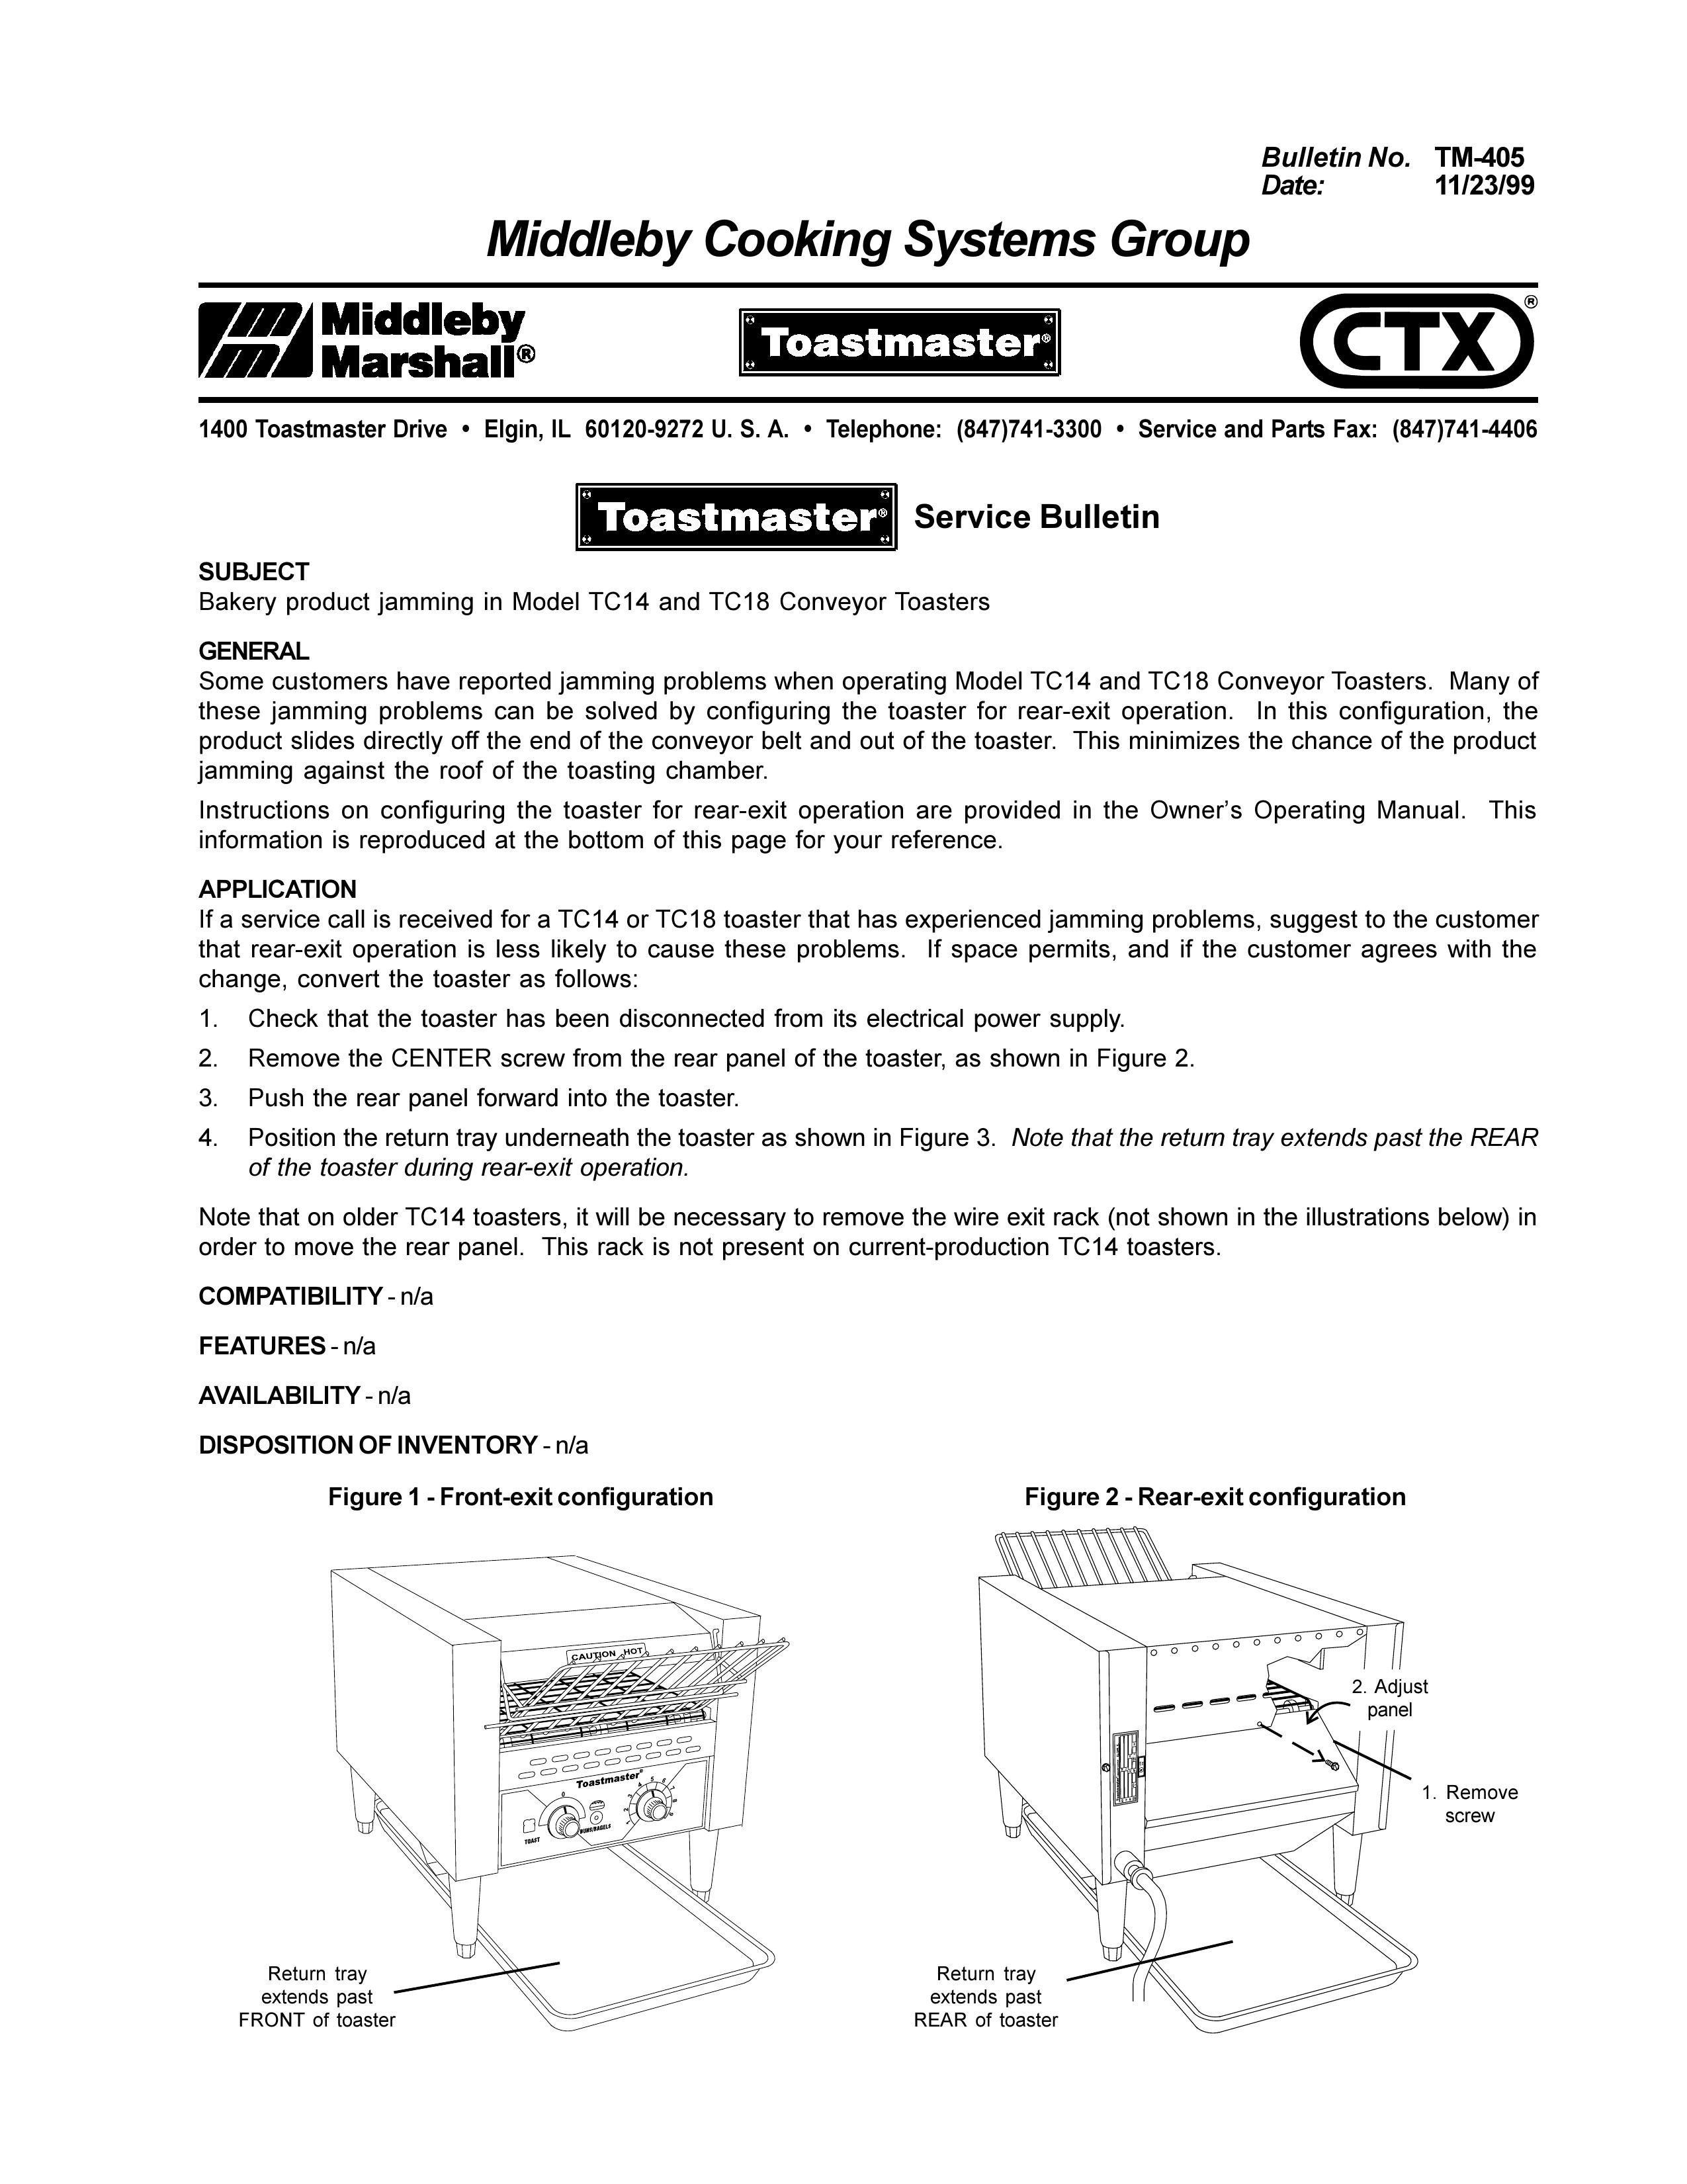 Middleby Marshall TC18 Toaster User Manual